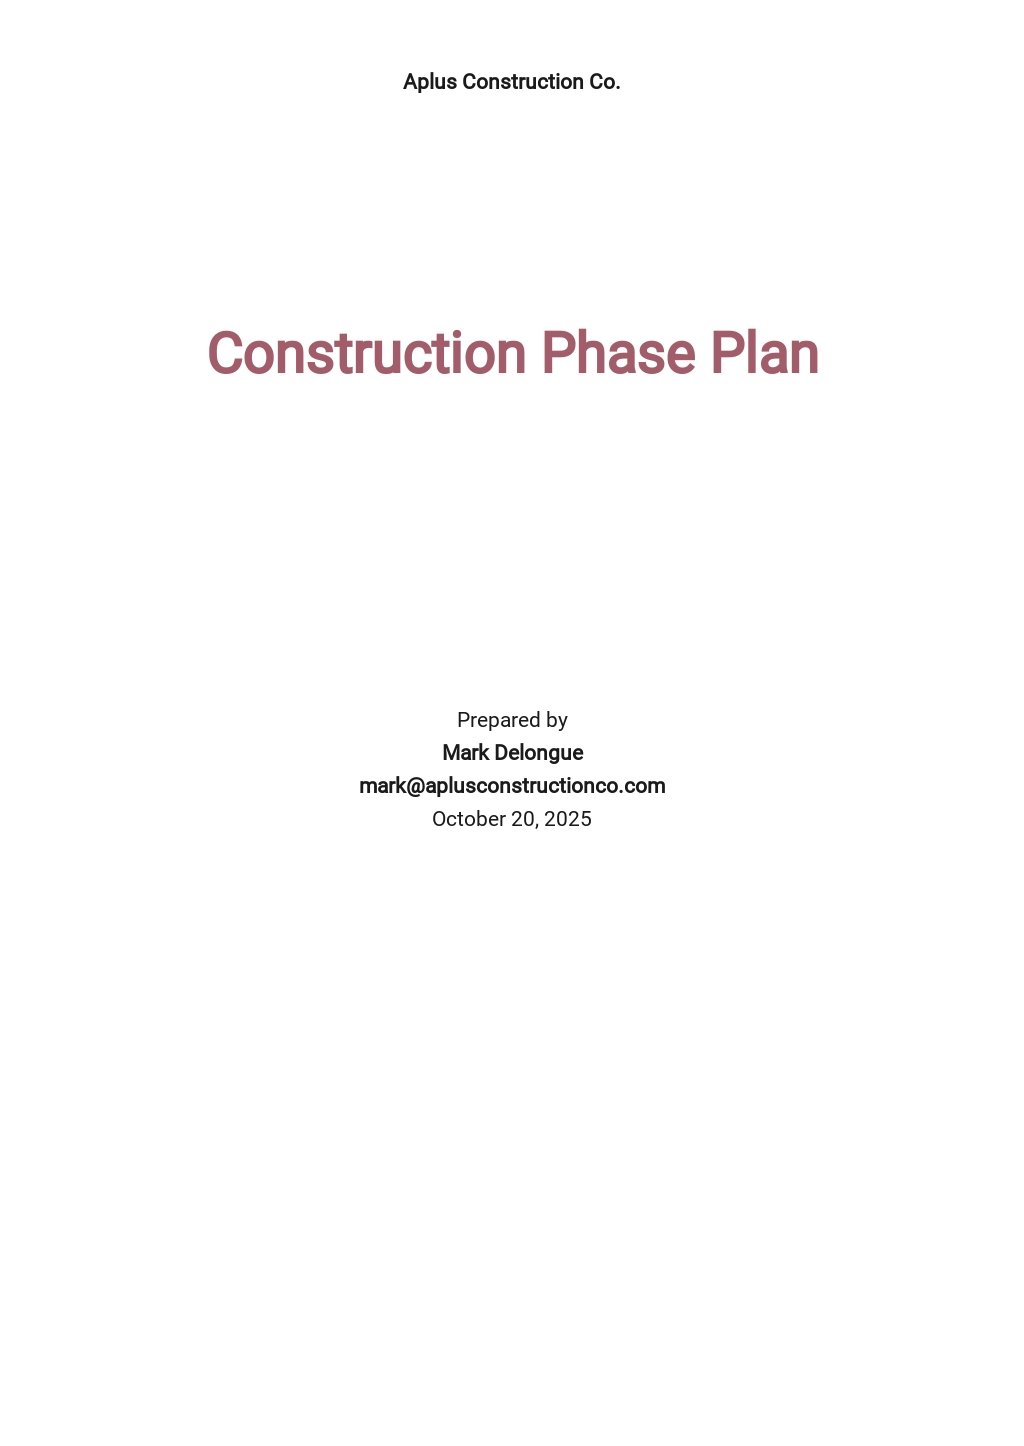 Basic Construction Phase Plan Template [Free PDF] - Google Docs, Word ...